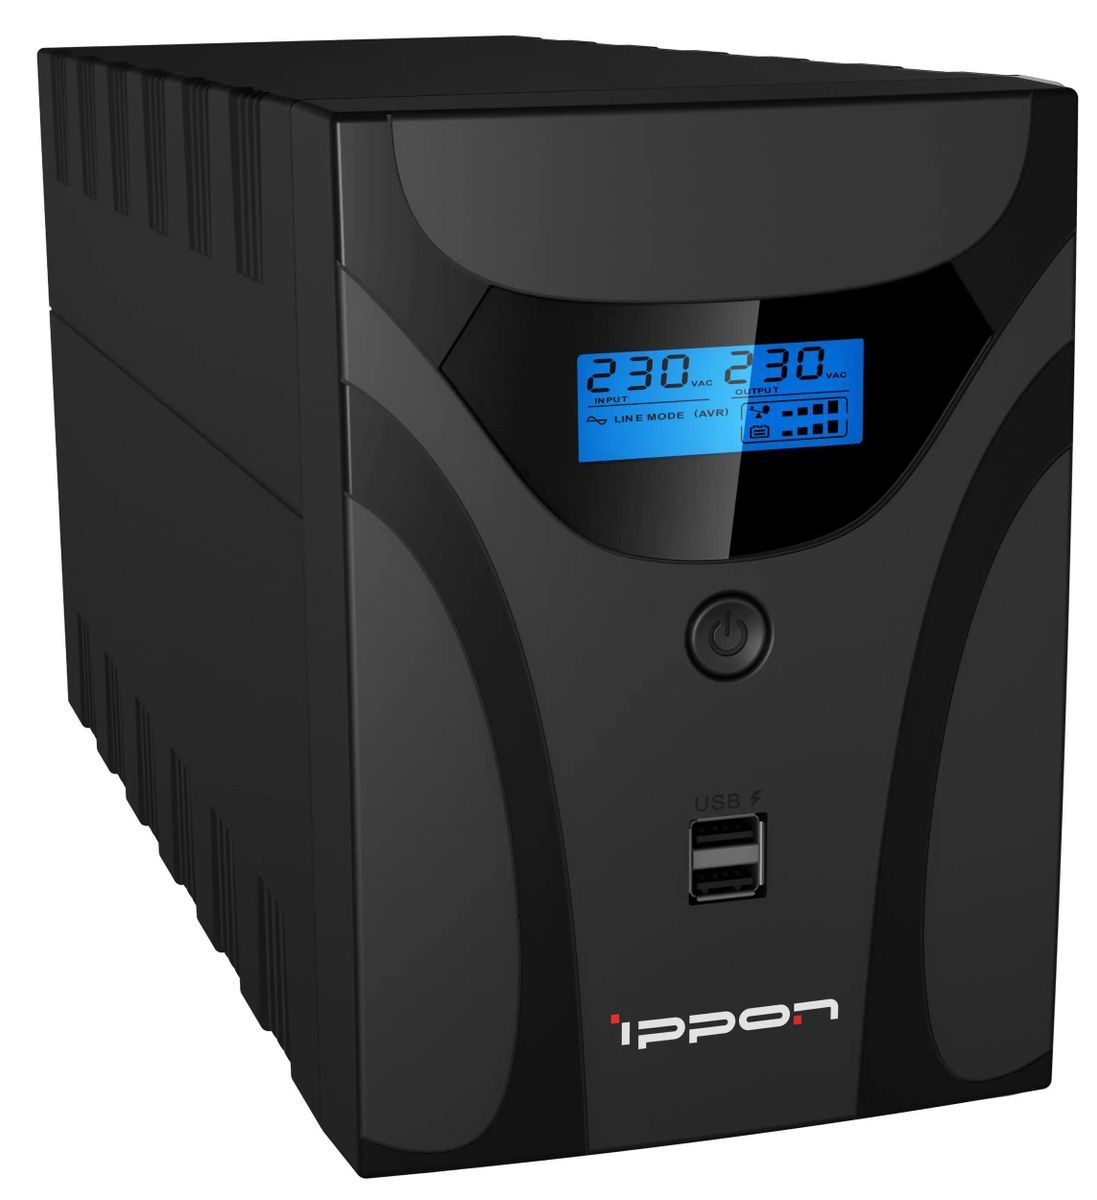 ИБП Ippon Smart Power Pro II Euro 2200 1200W/2000WA (1029746) источник бесперебойного питания ippon smart power pro ii euro 2200